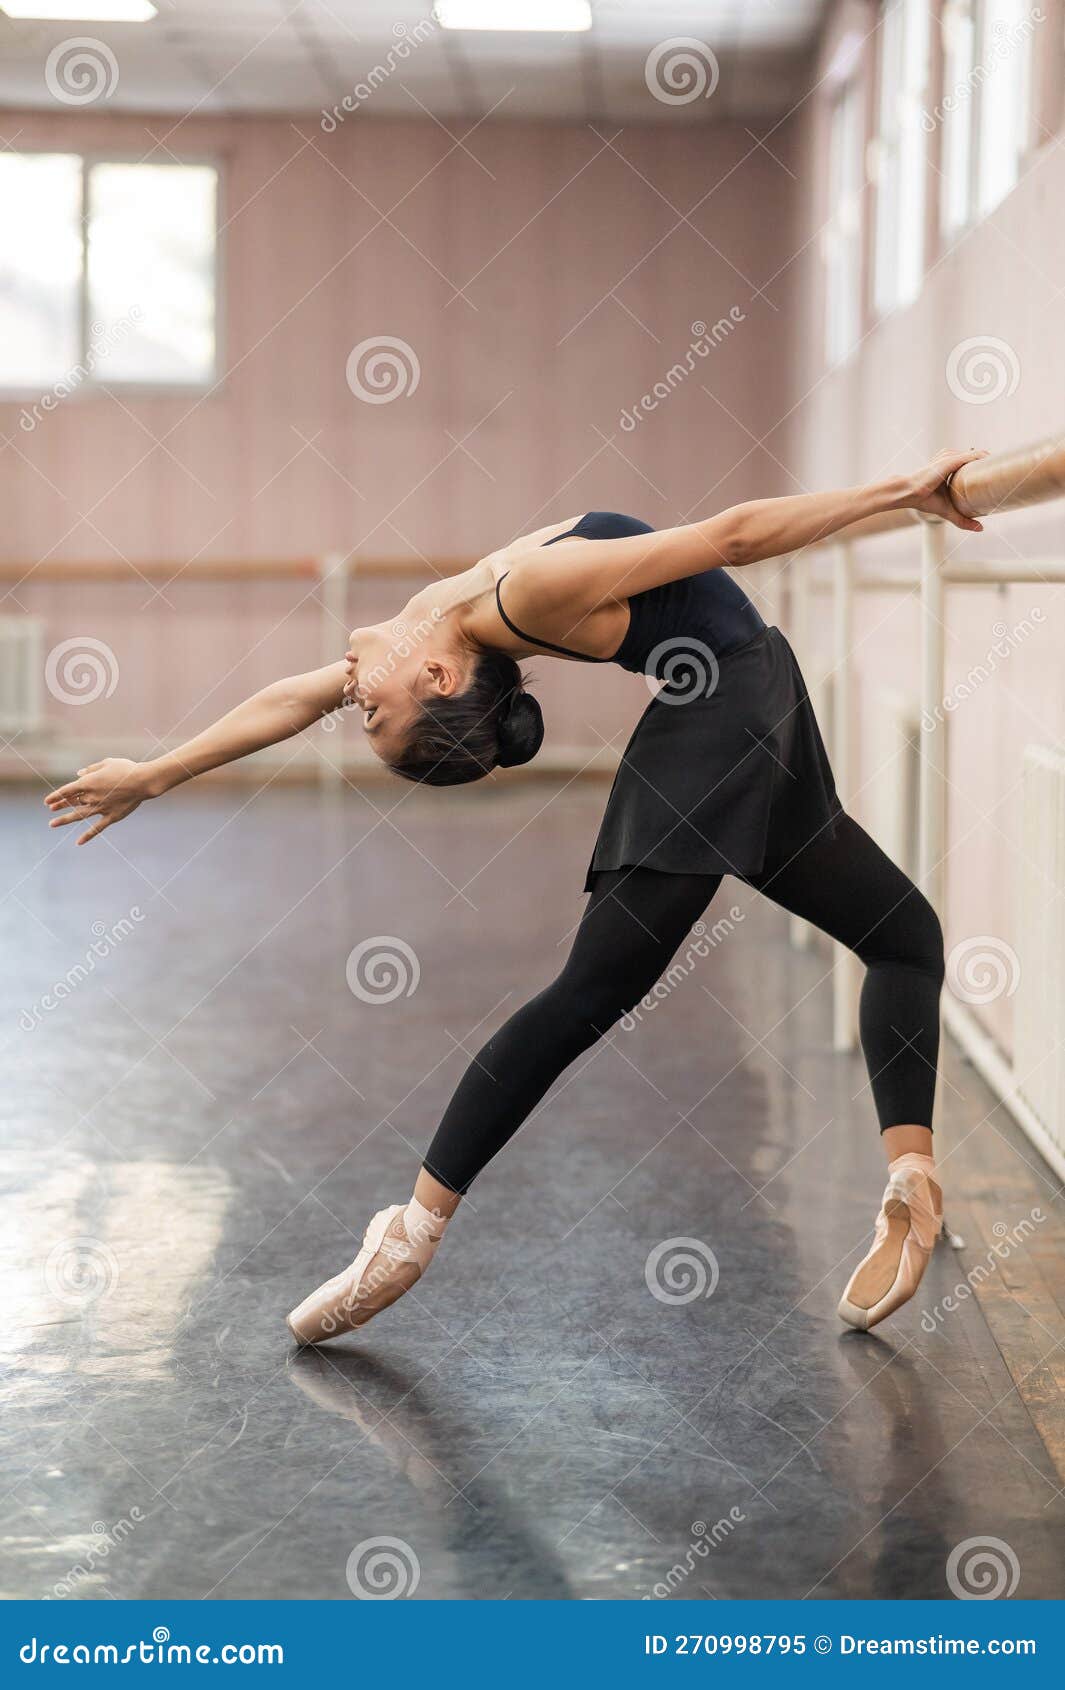 https://thumbs.dreamstime.com/z/asian-woman-doing-back-flexibility-exercises-ballet-barre-asian-woman-doing-back-flexibility-exercises-ballet-barre-270998795.jpg